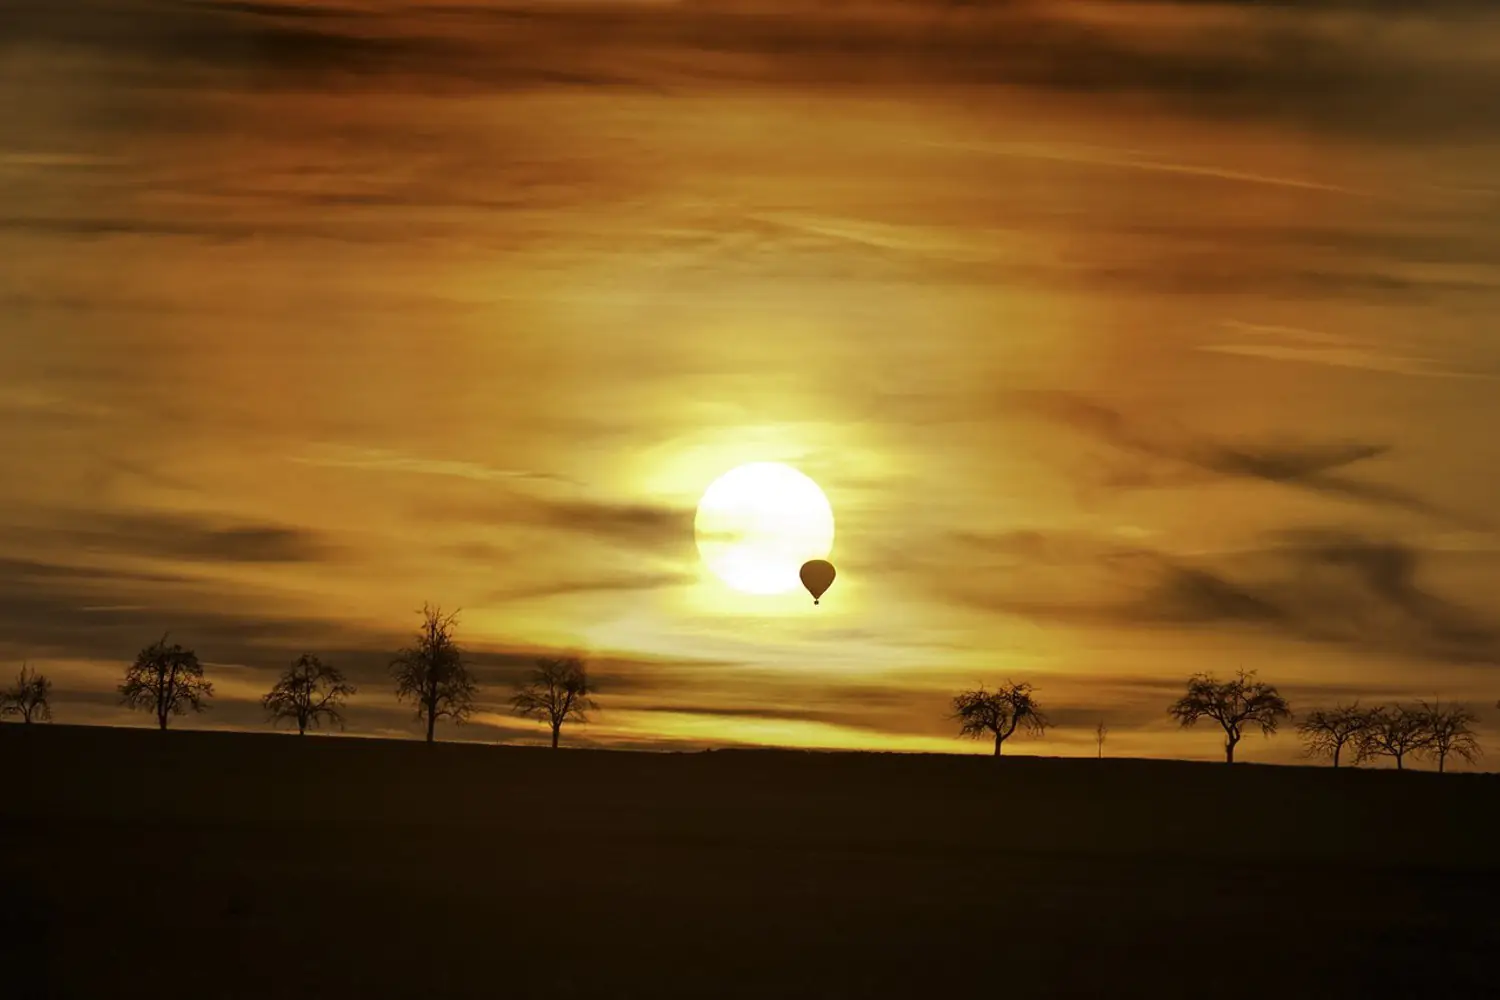 Fototapete Sonnenuntergang mit Heissluft Ballon